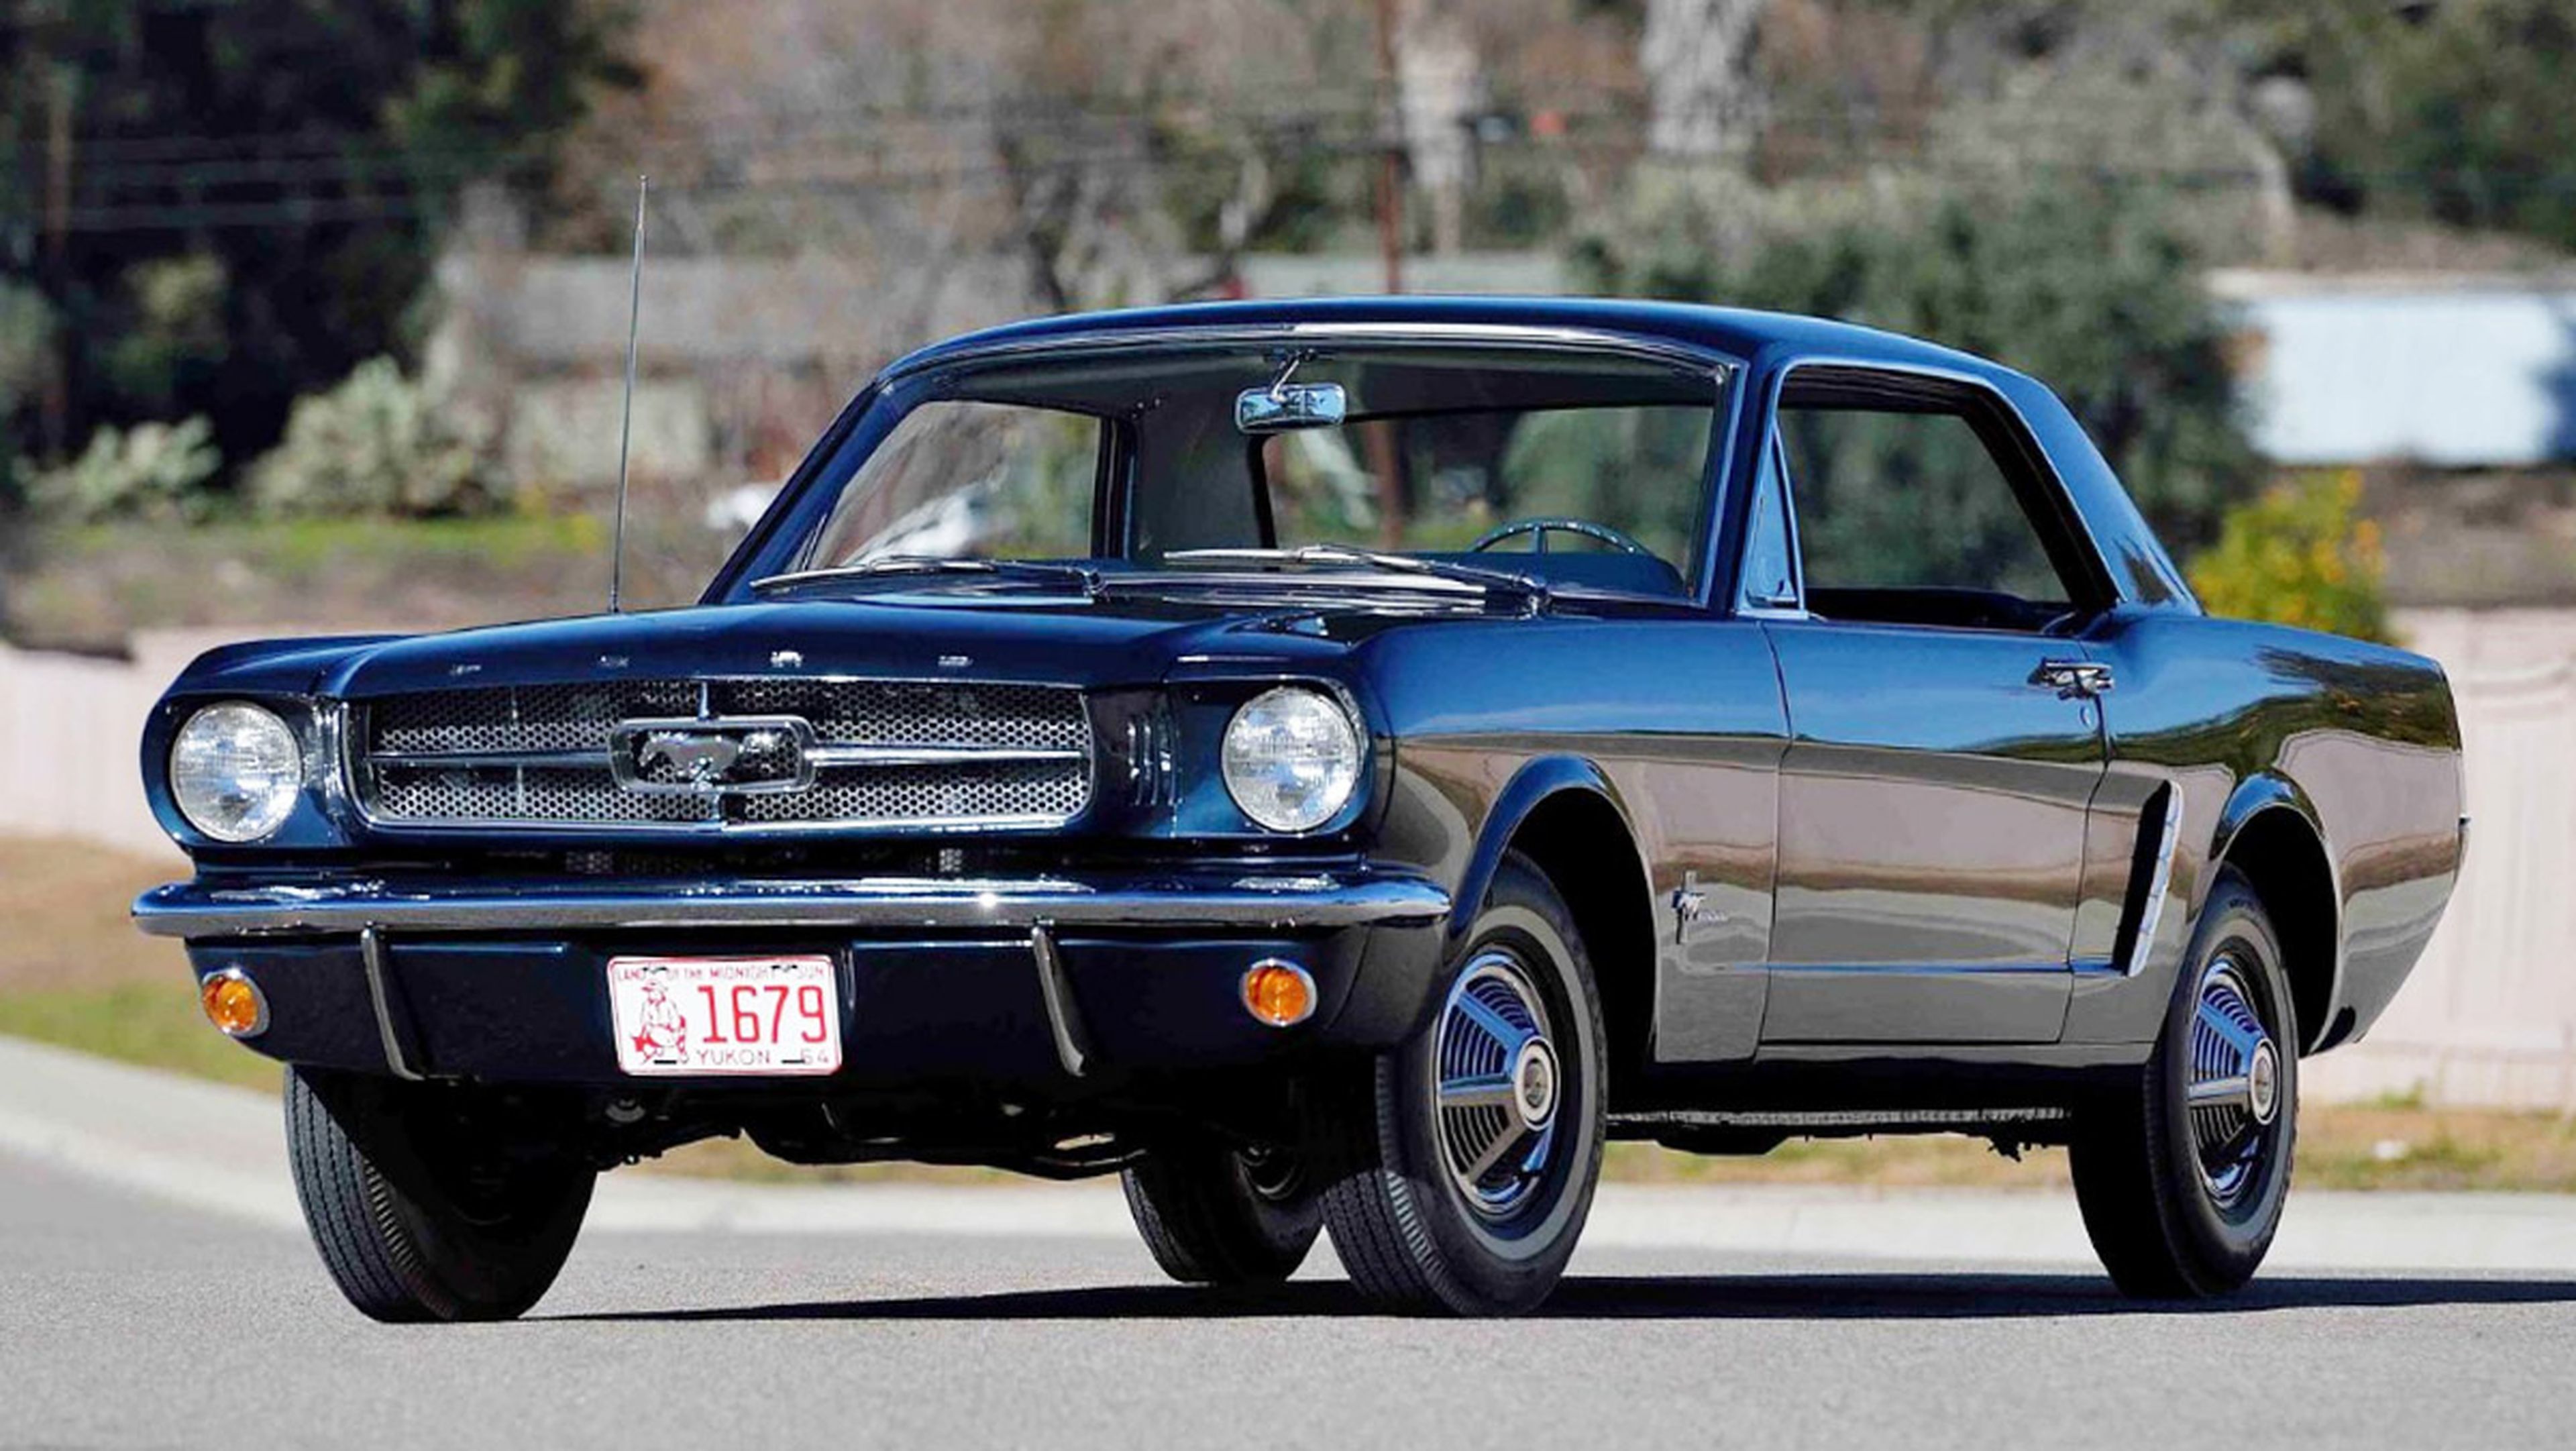 Este Ford Mustang de 1965 se subastará pronto